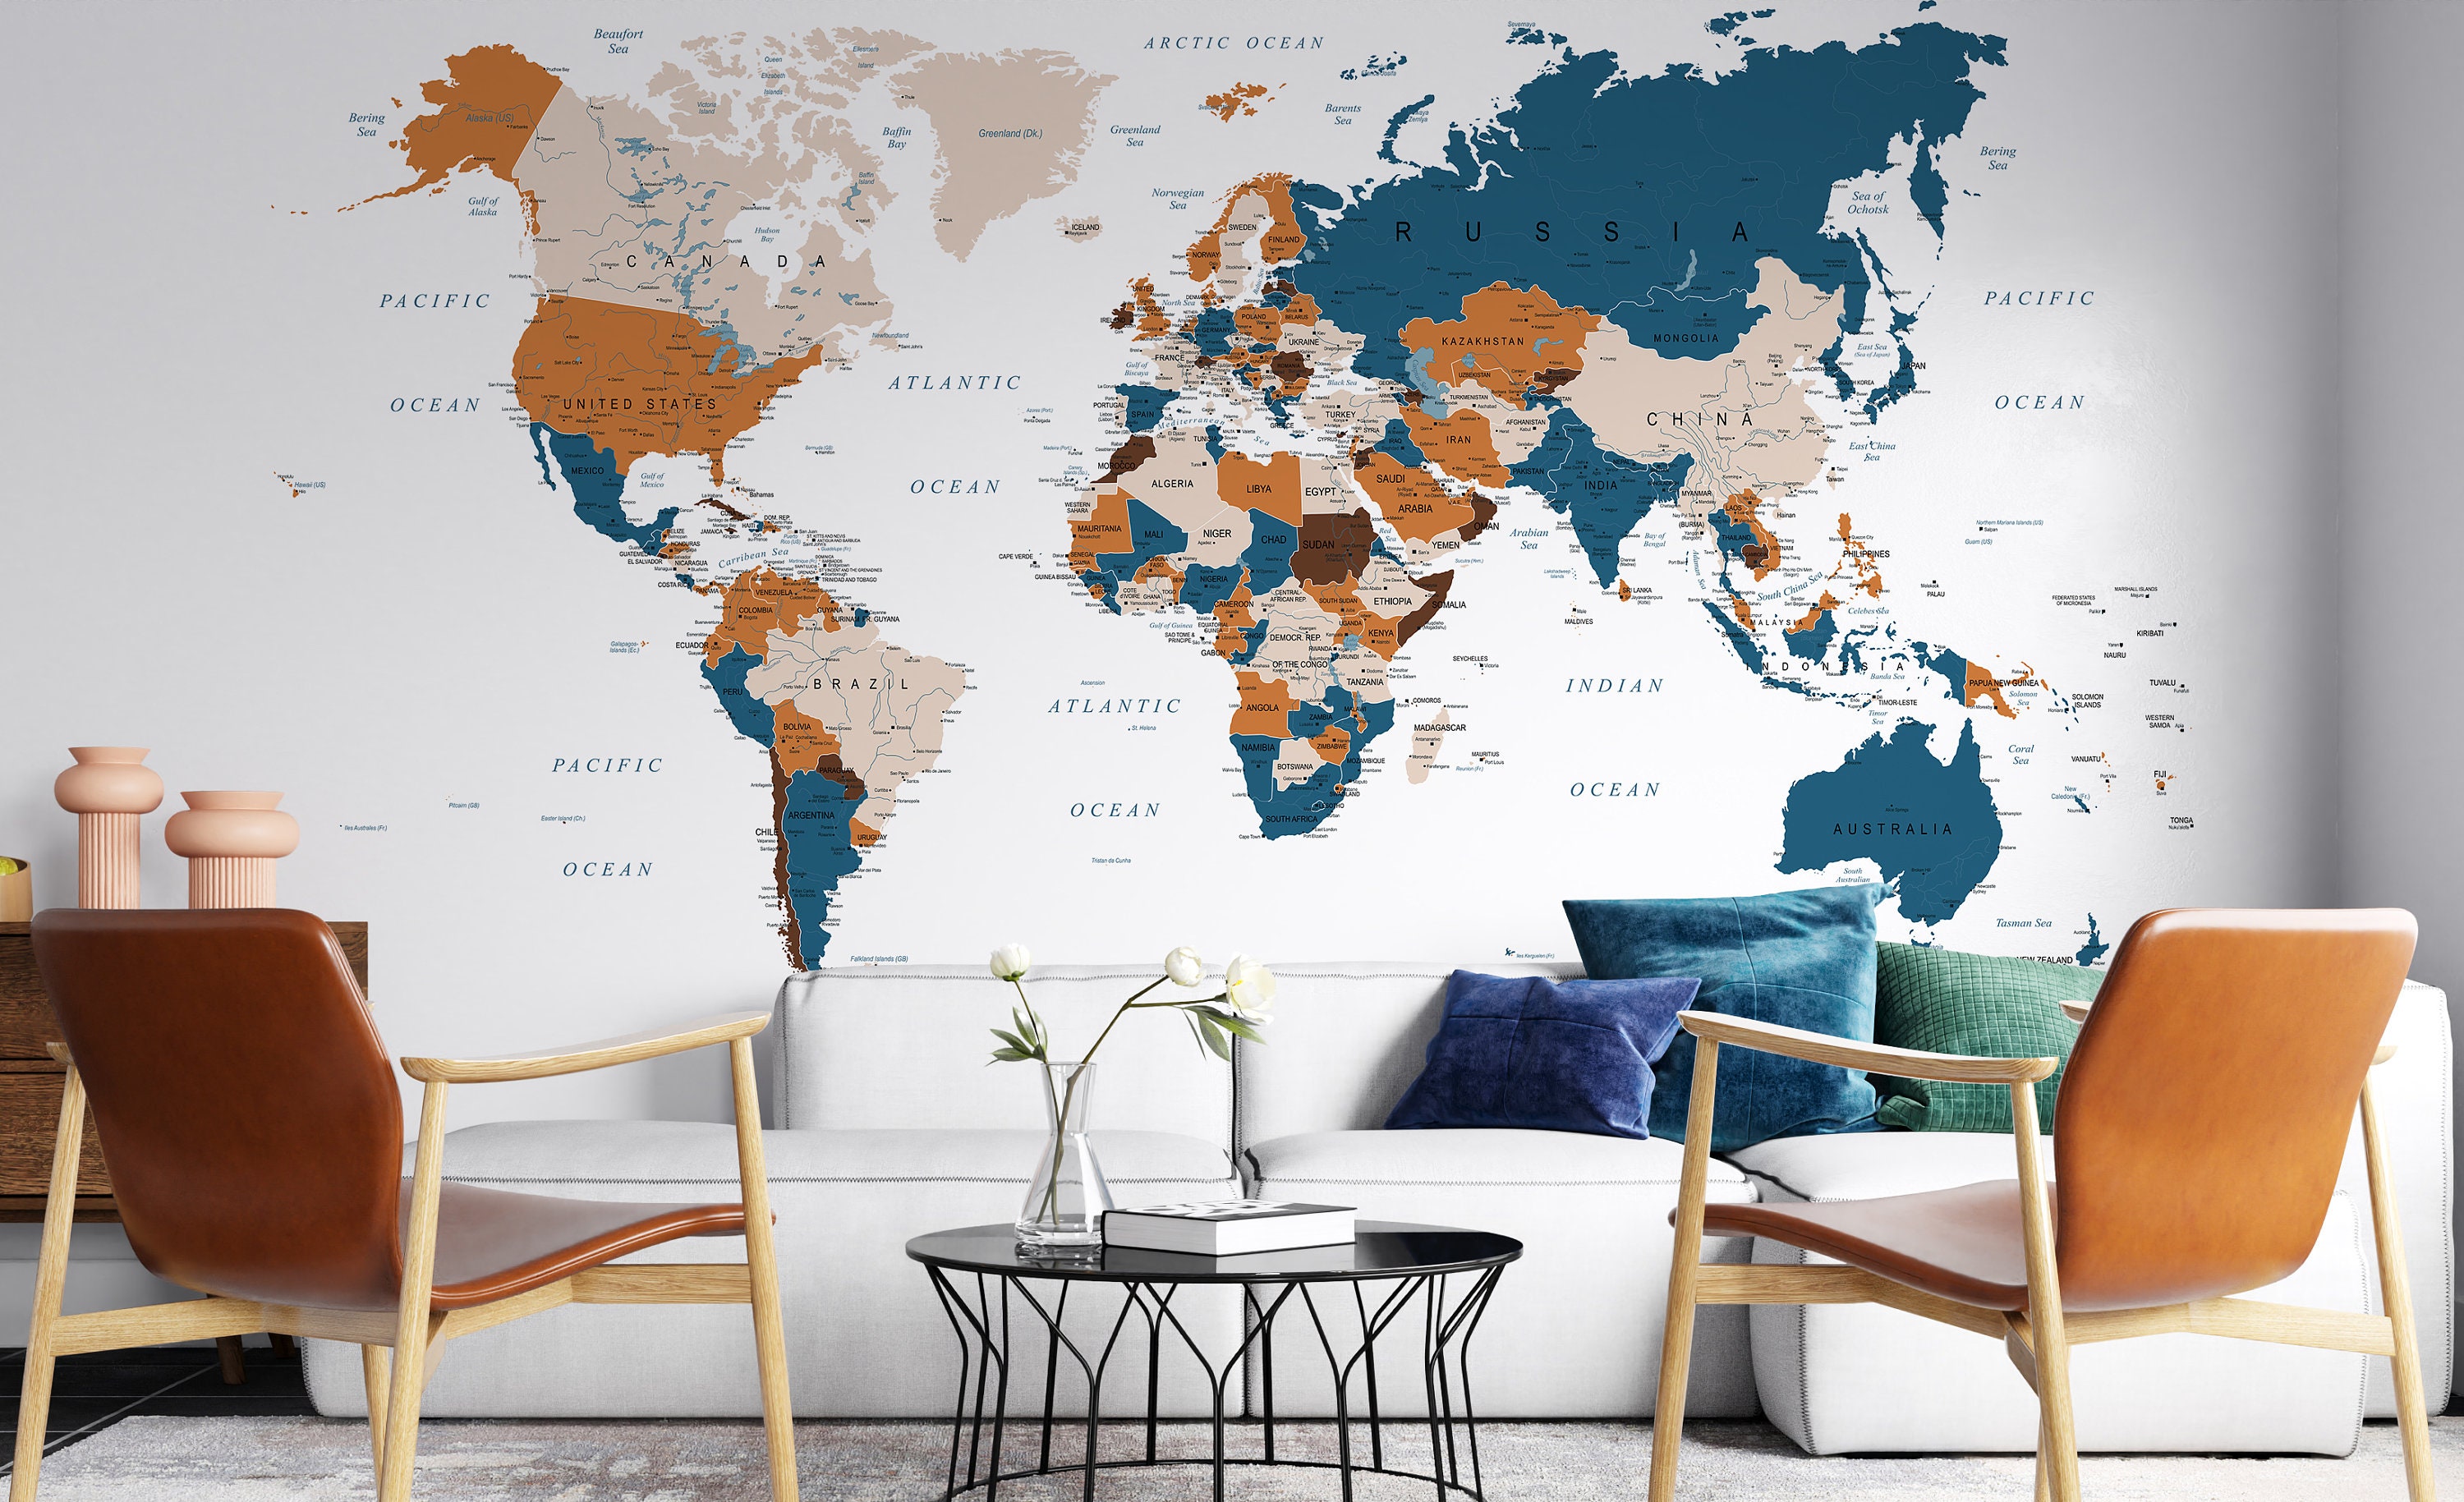 149797 World Map Wallpaper Images Stock Photos  Vectors  Shutterstock